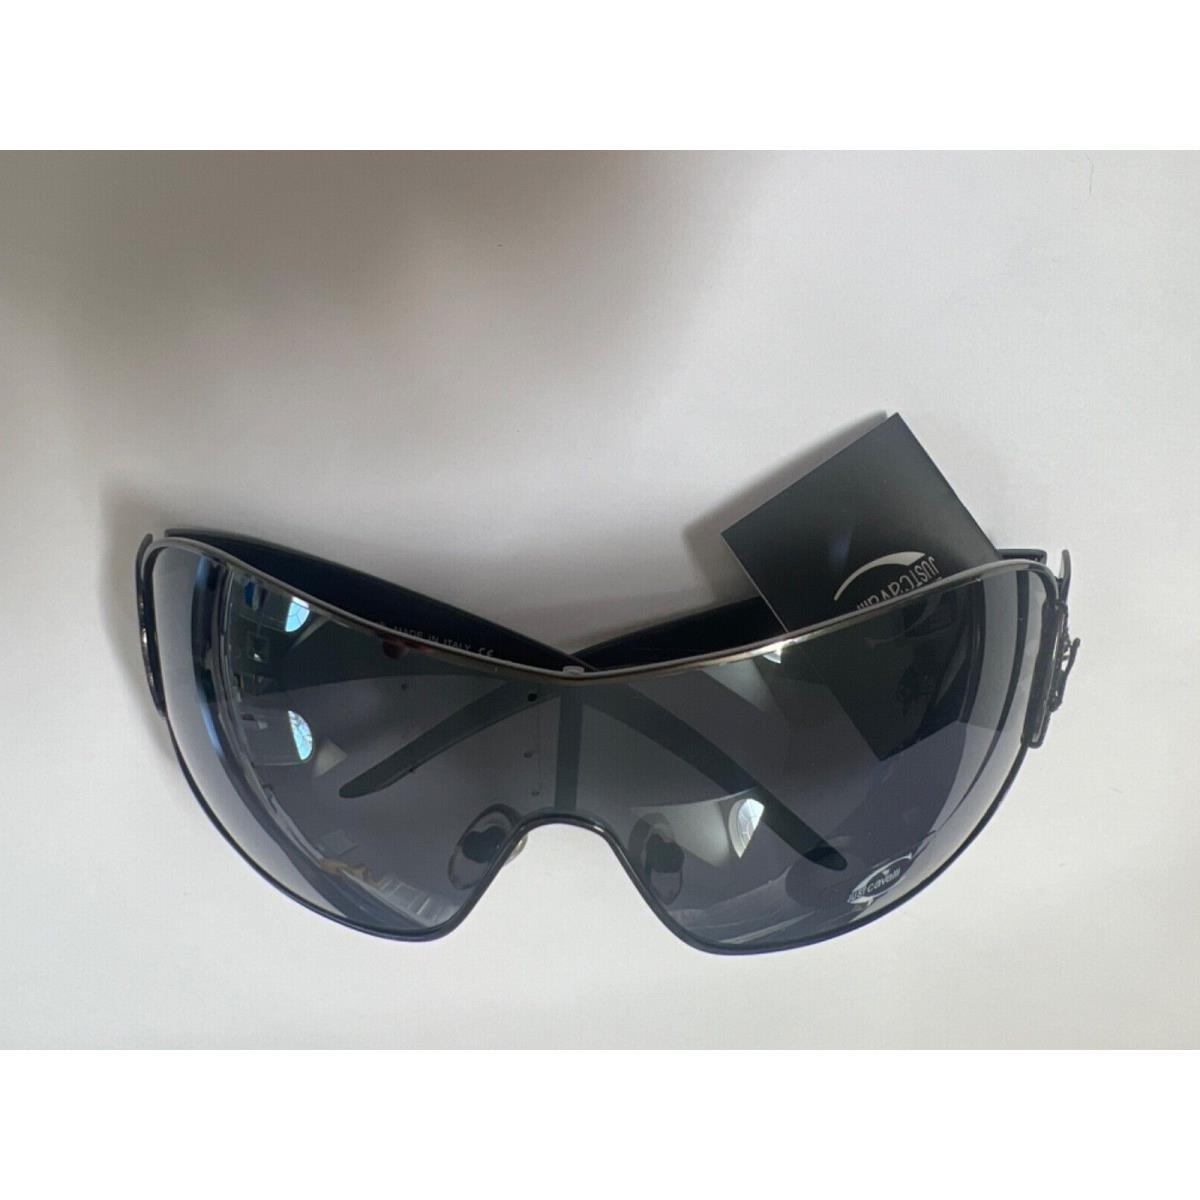 Just Cavalli sunglasses  - Black Frame, DARK Lens